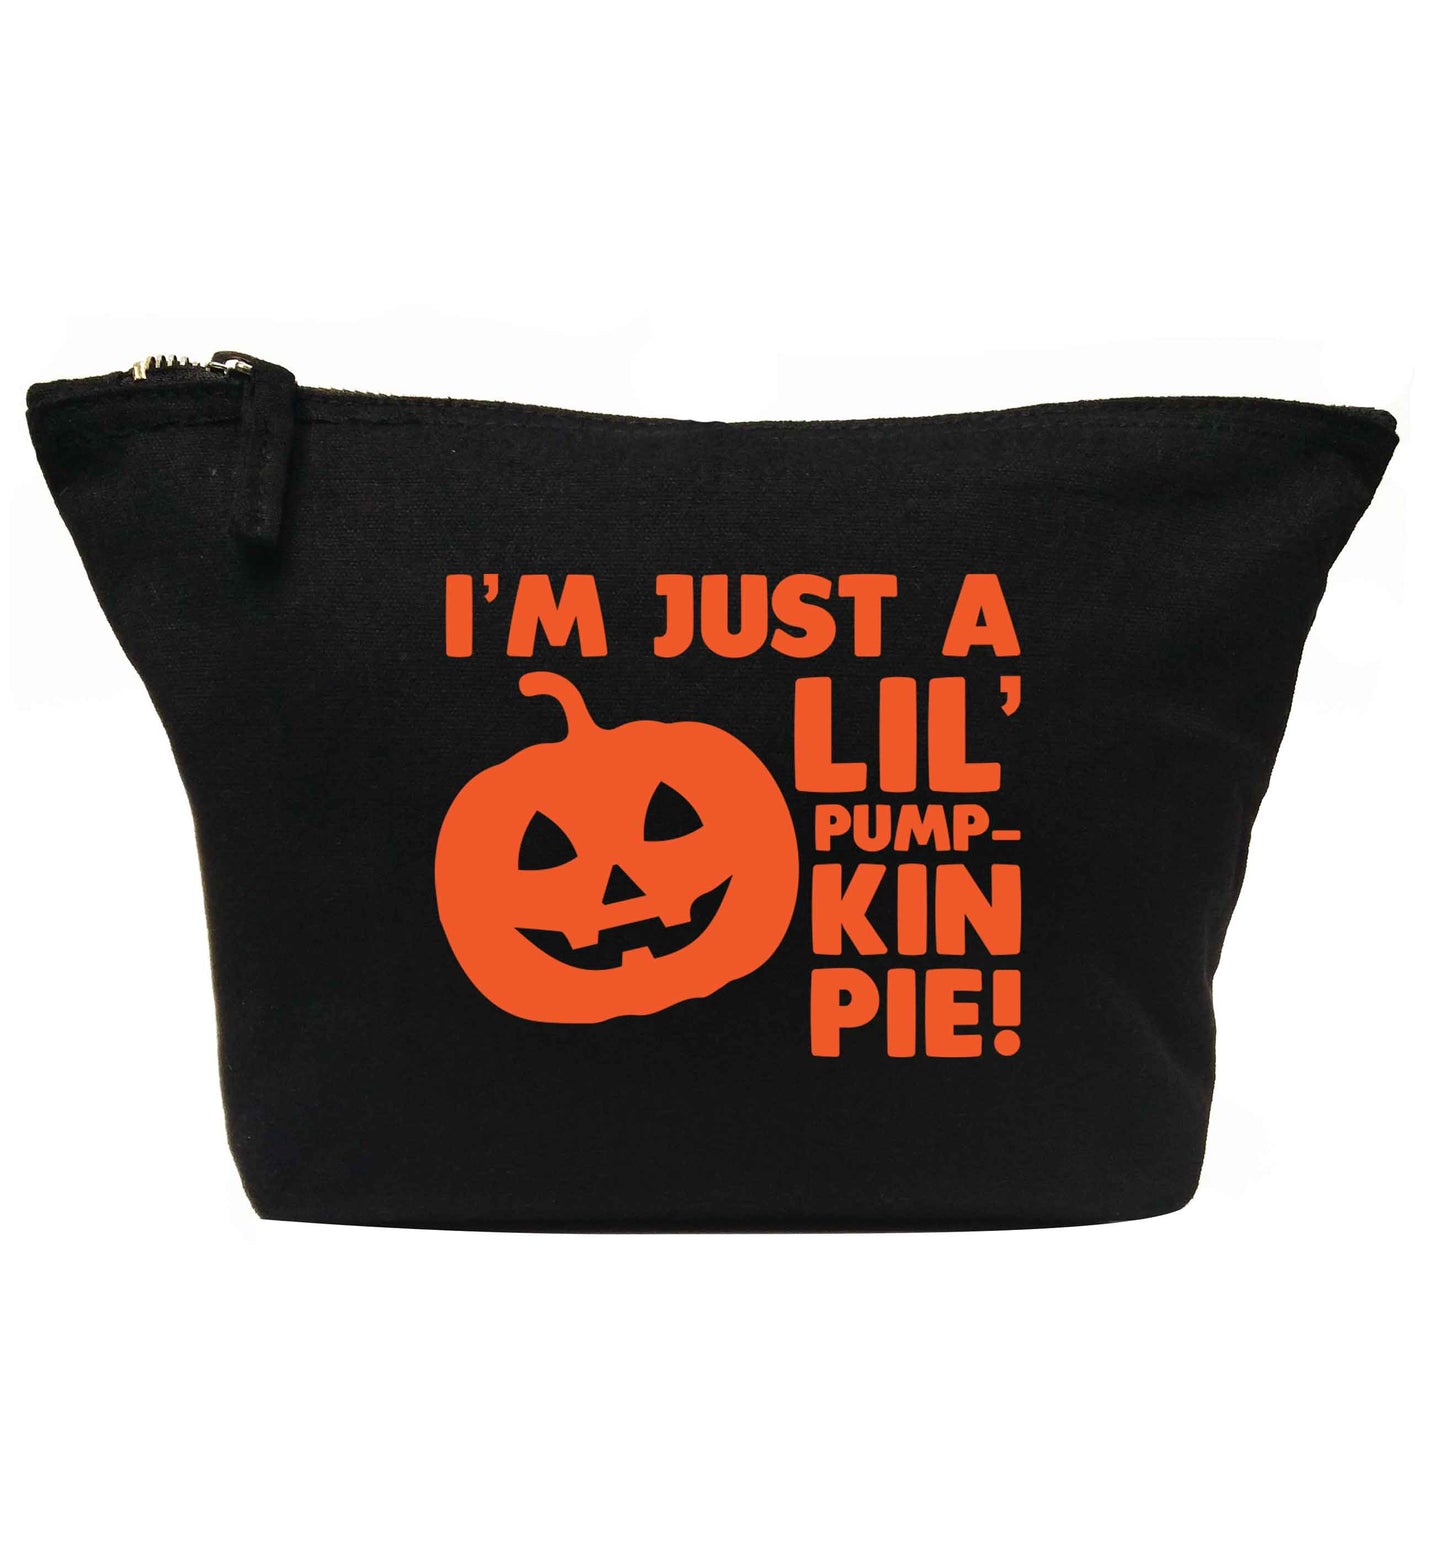 I'm just a lil' pumpkin pie | Makeup / wash bag